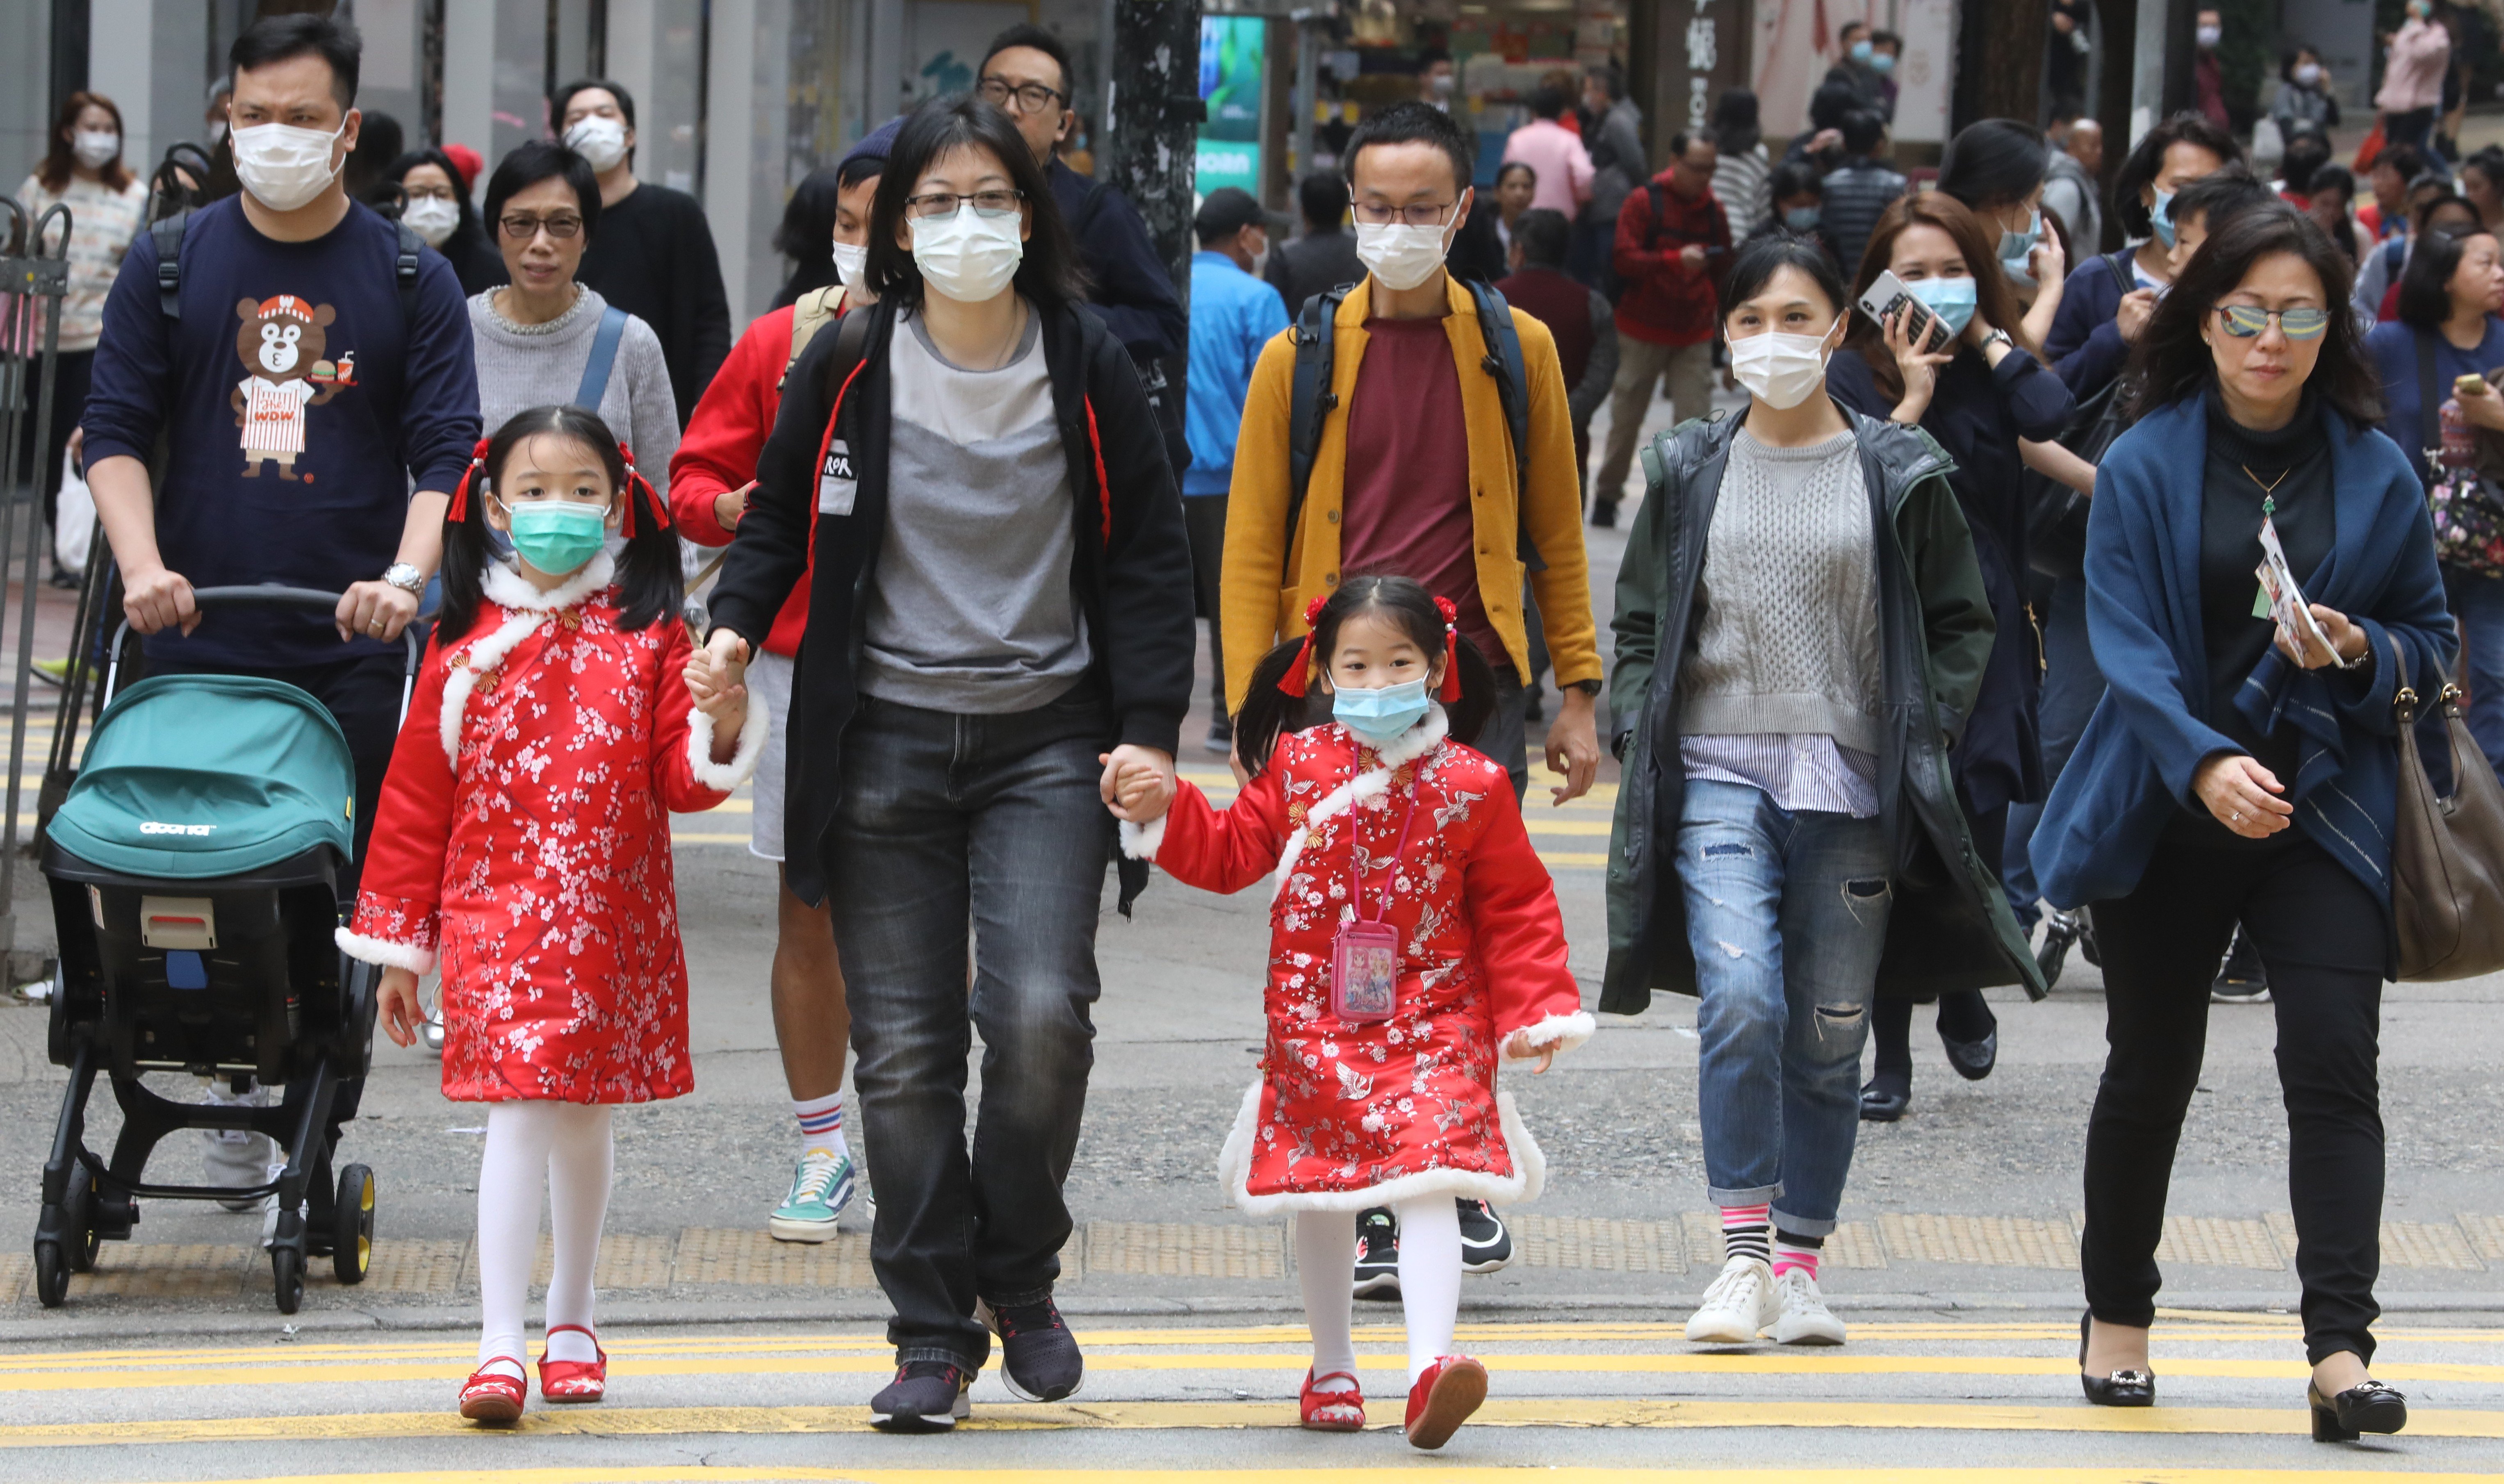 Pedestrians with masks in Hong Kong’s Causeway Bay. Photo: Dickson Lee